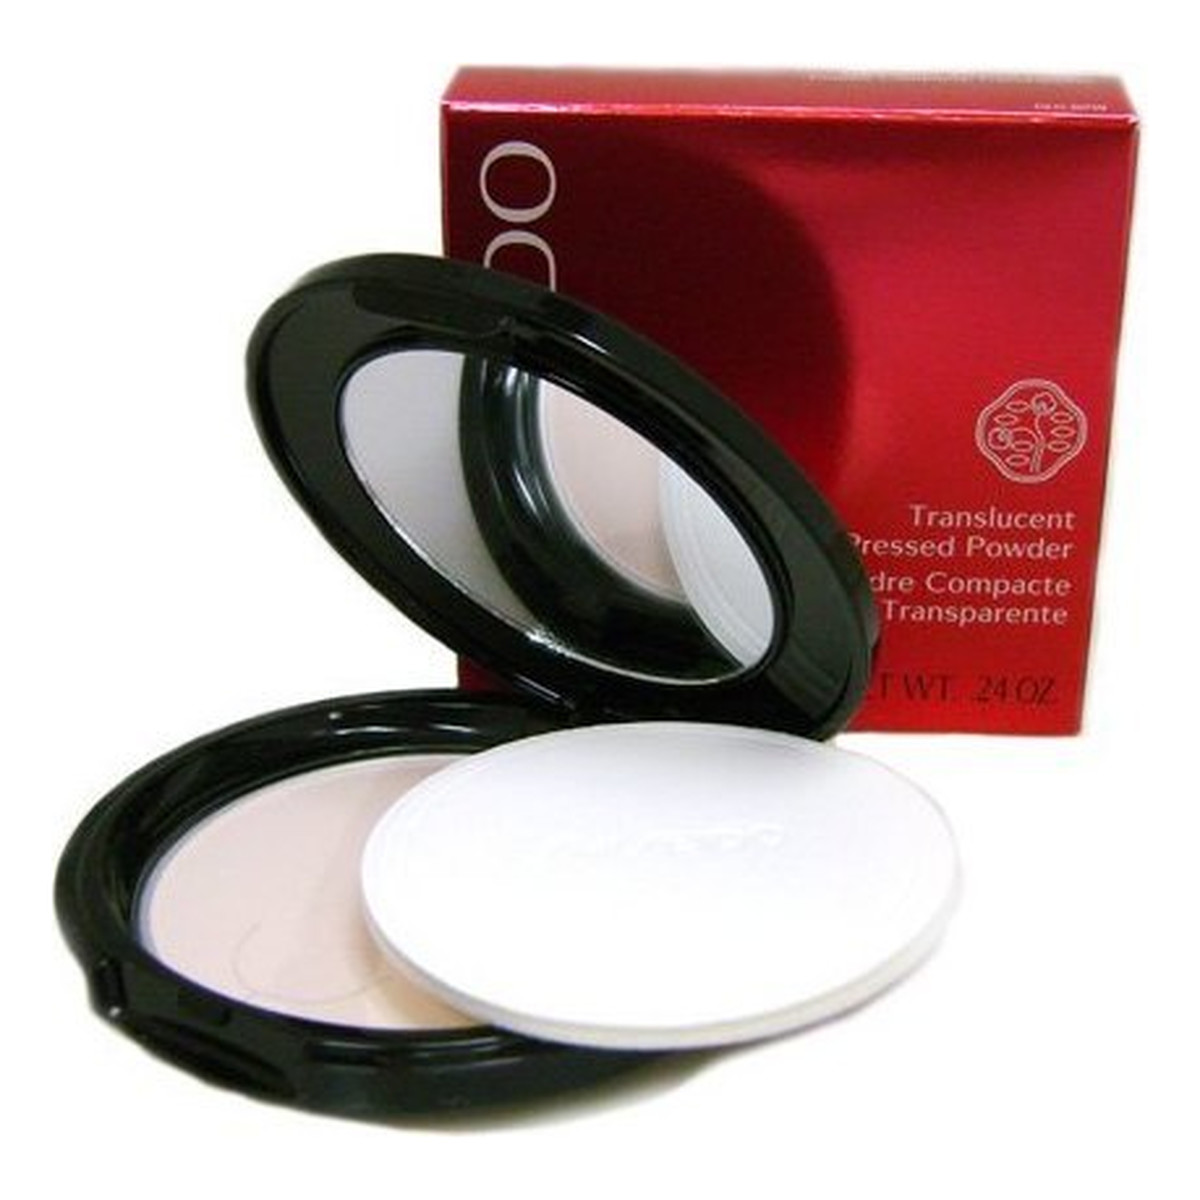 Shiseido Translucent Pressed Powder puder prasowany transparentny 7g